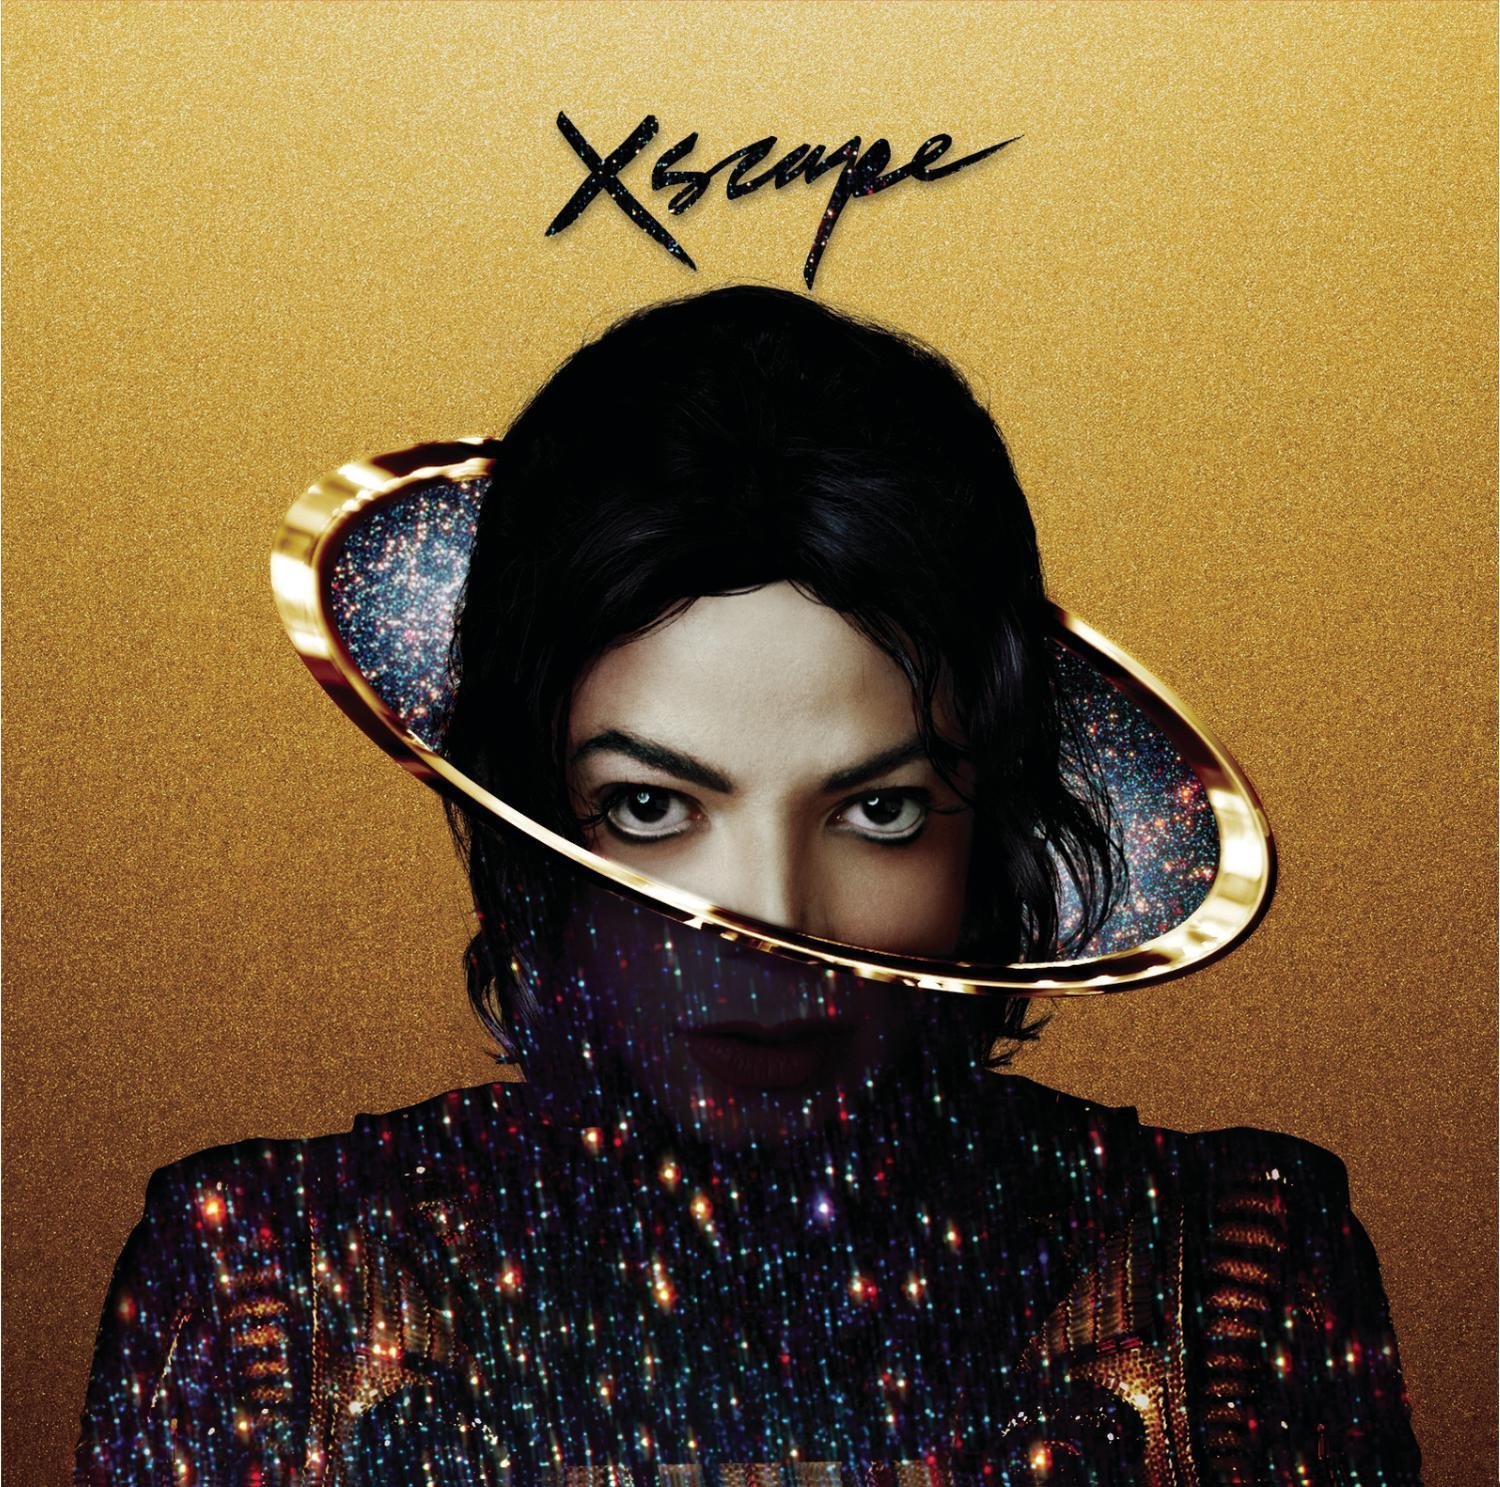 Michael Jackson “Xscape” Documentary